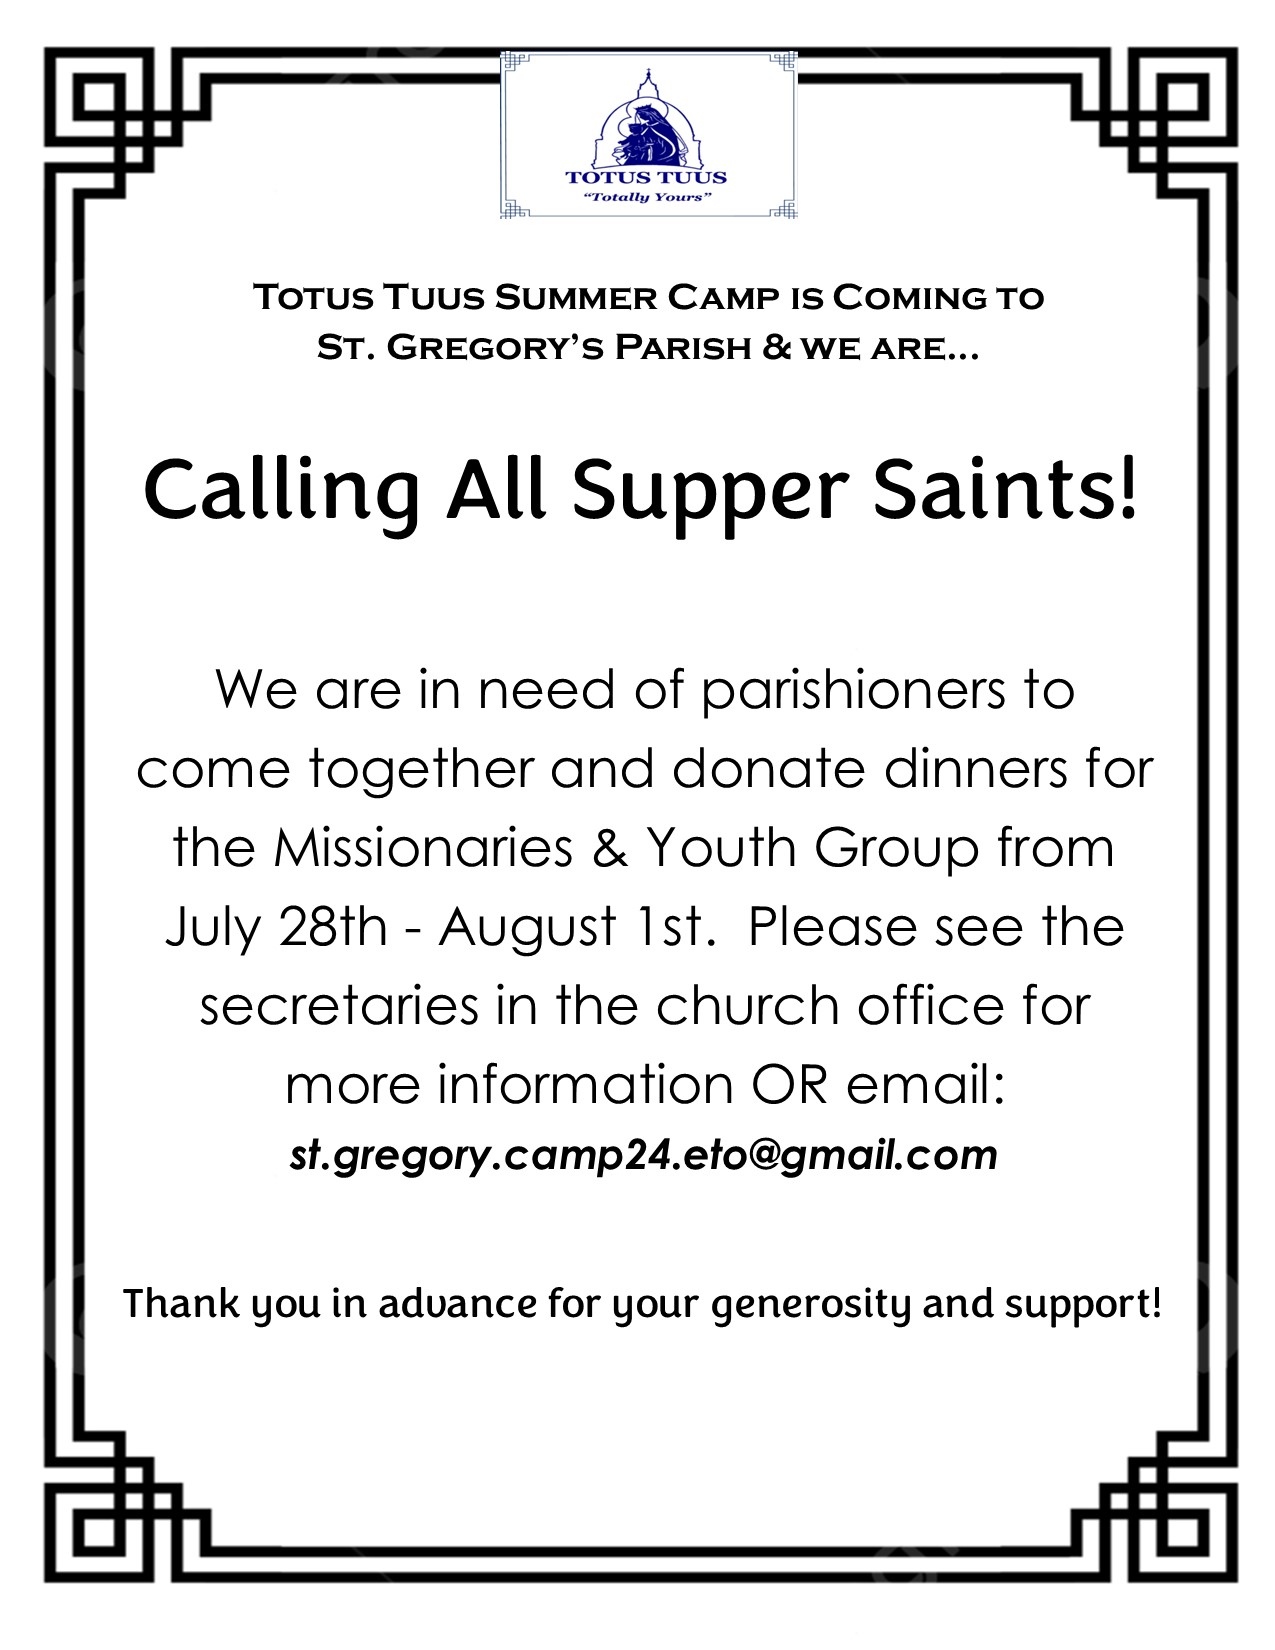 Calling All Supper Saints